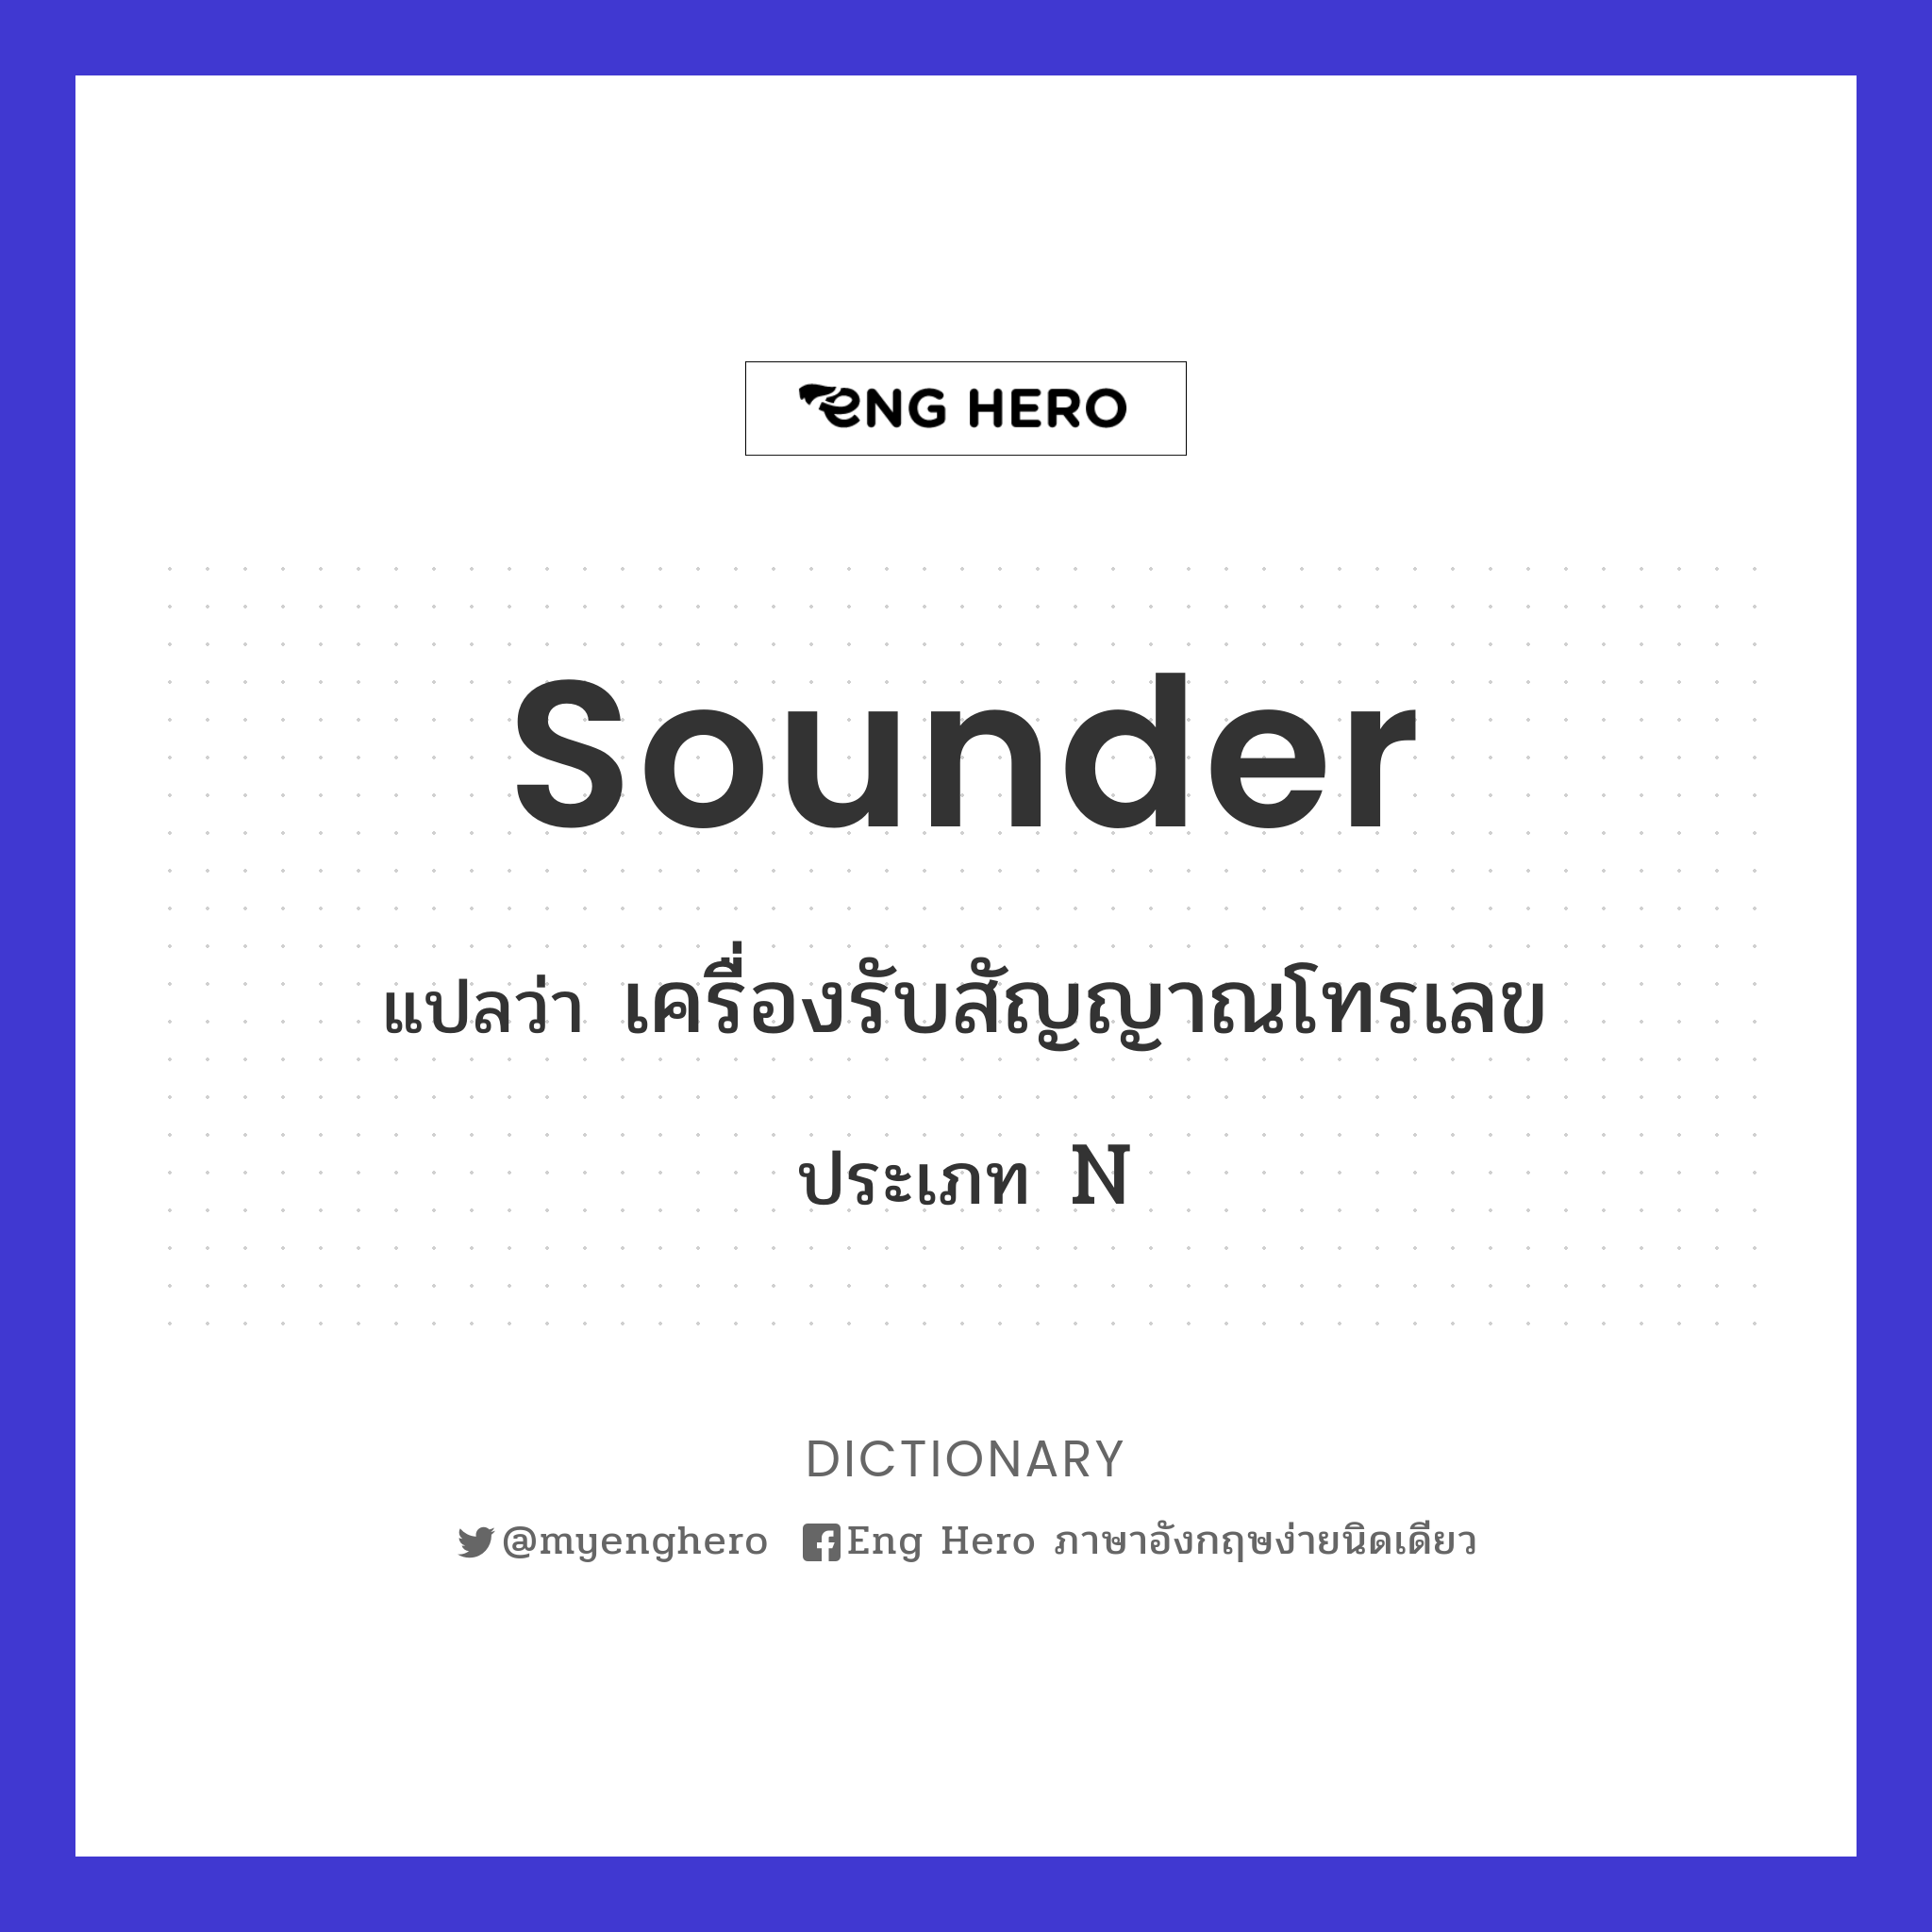 sounder